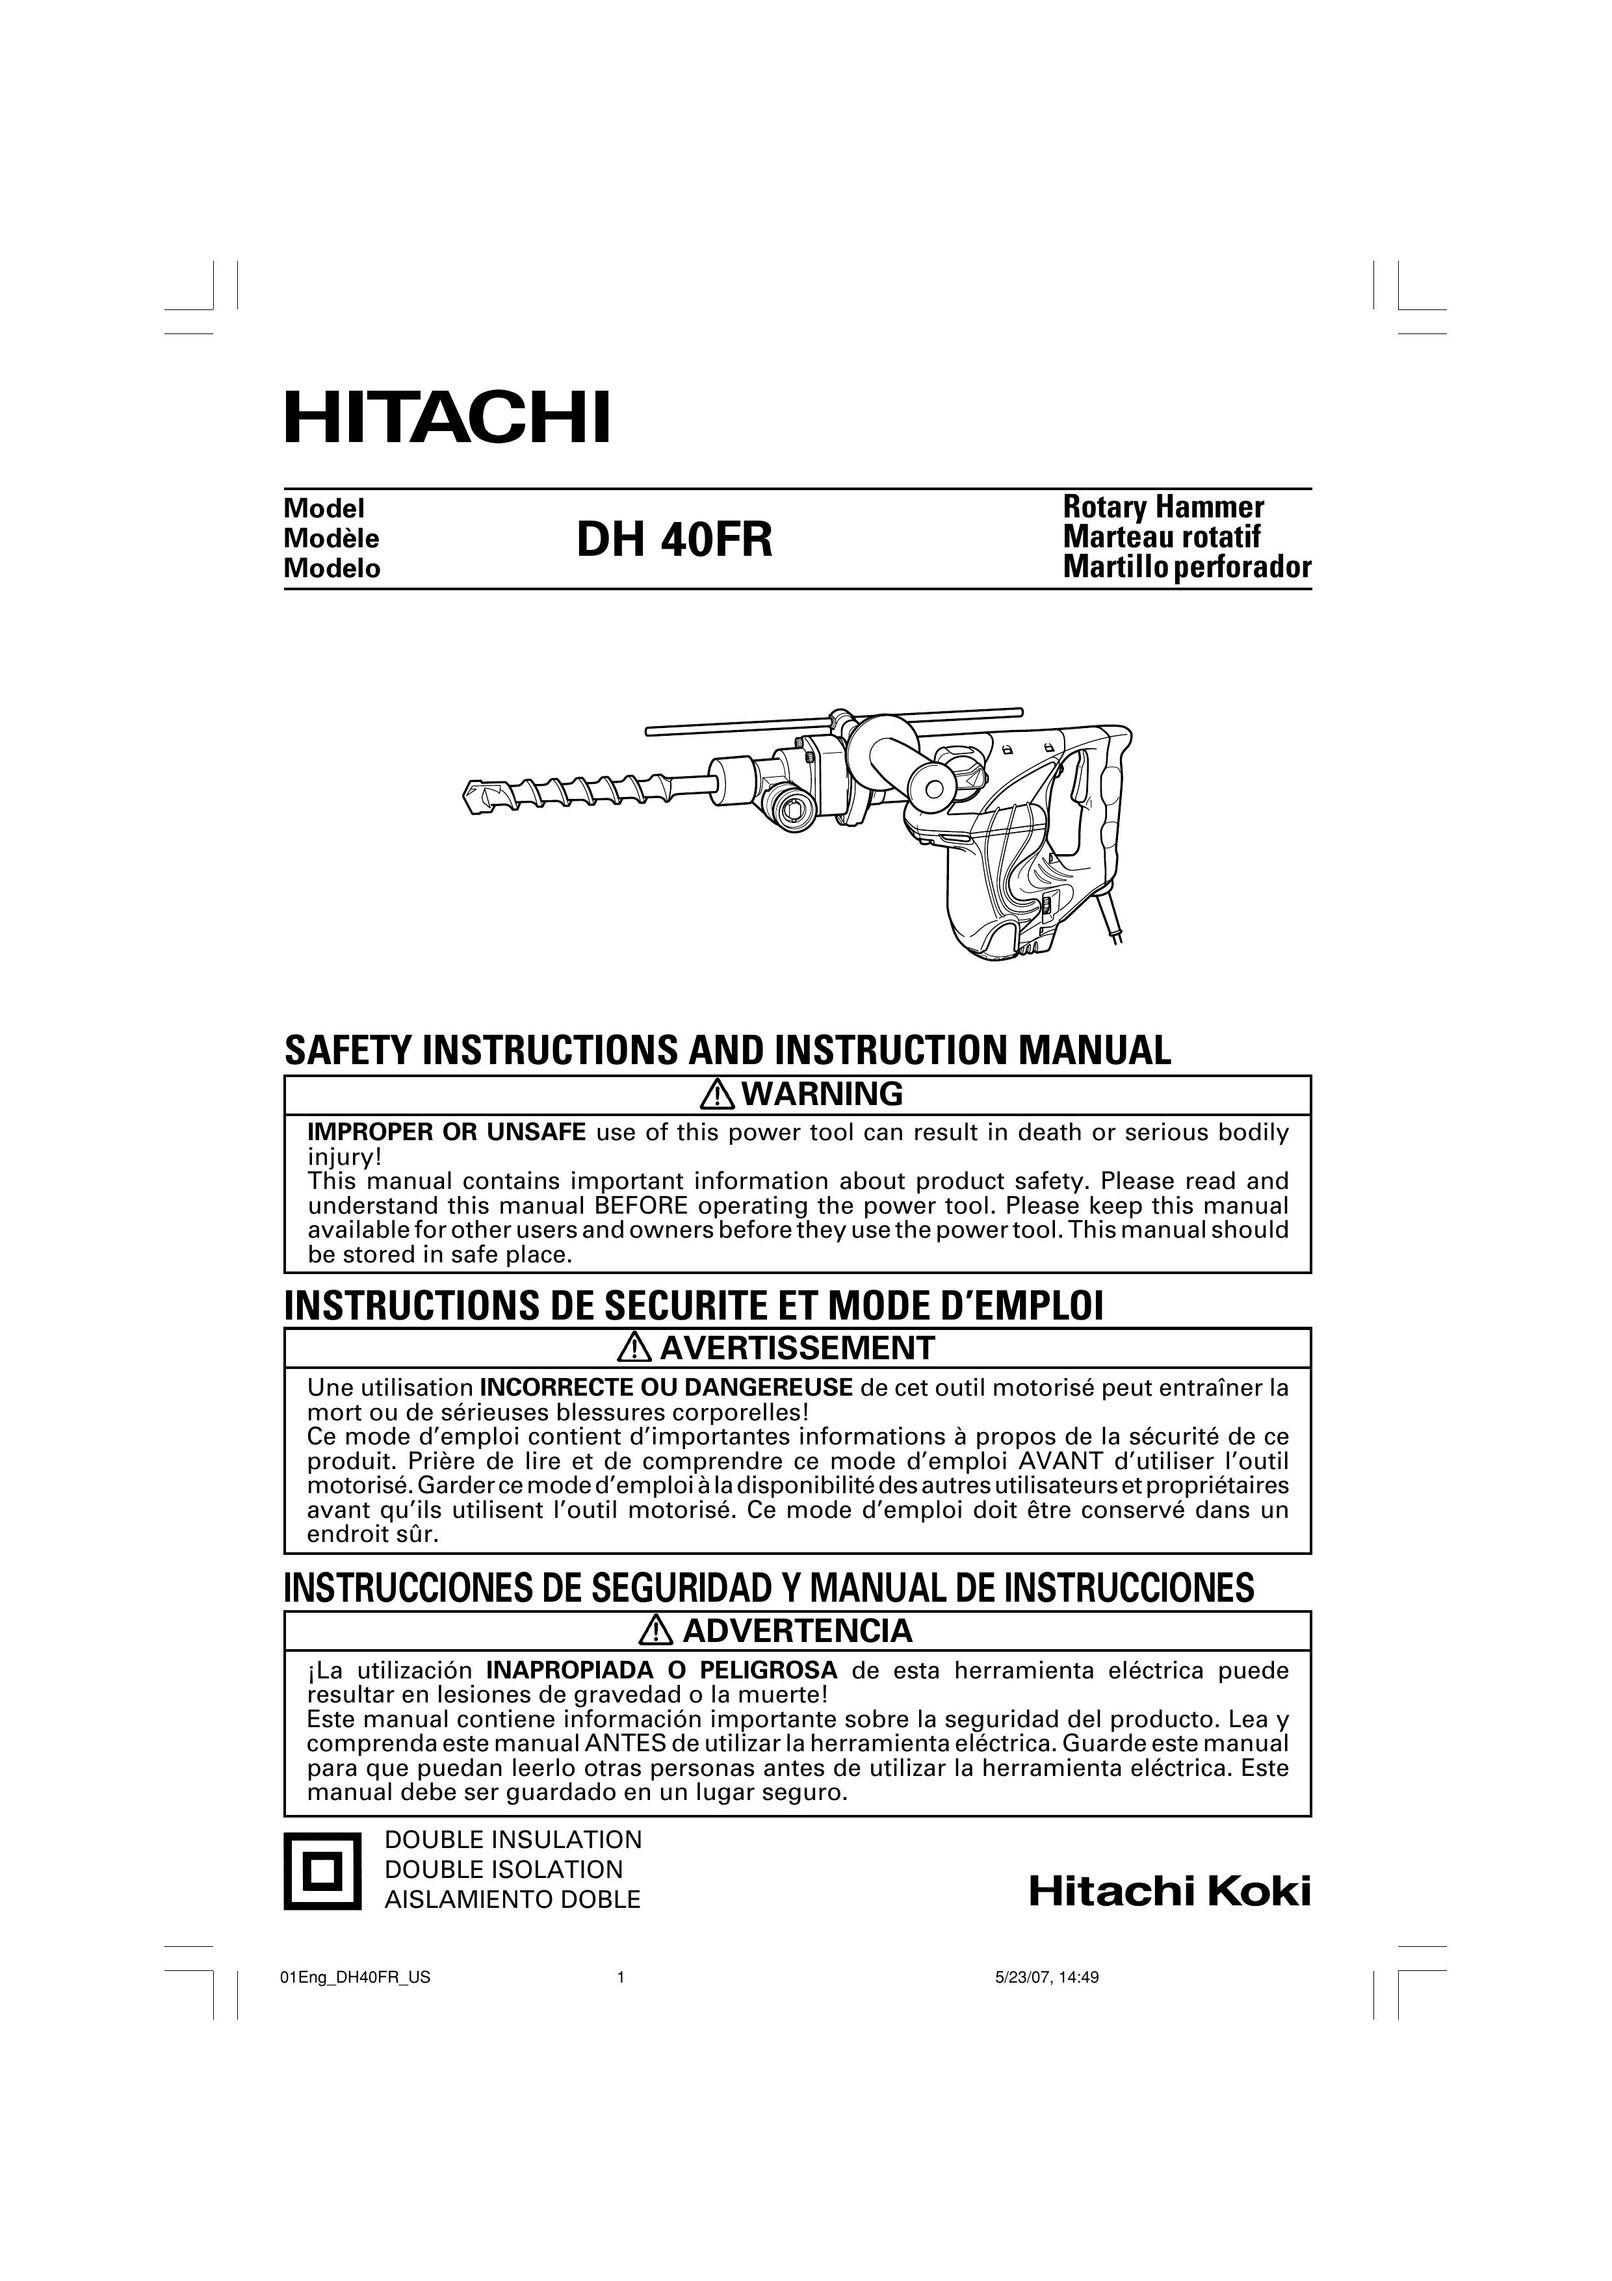 Hitachi DH40FR Power Hammer User Manual